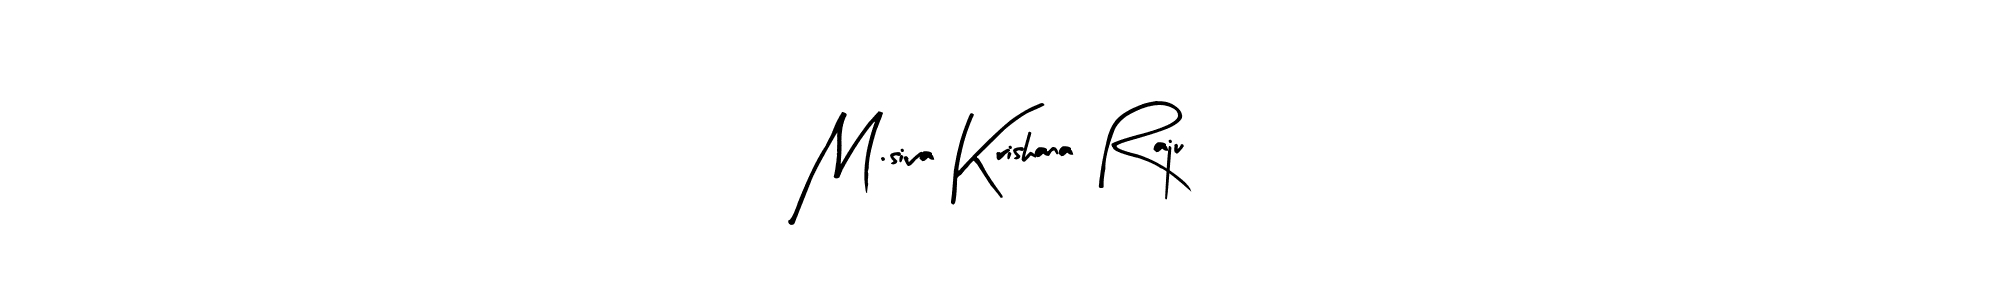 How to Draw M.siva Krishana Raju signature style? Arty Signature is a latest design signature styles for name M.siva Krishana Raju. M.siva Krishana Raju signature style 8 images and pictures png